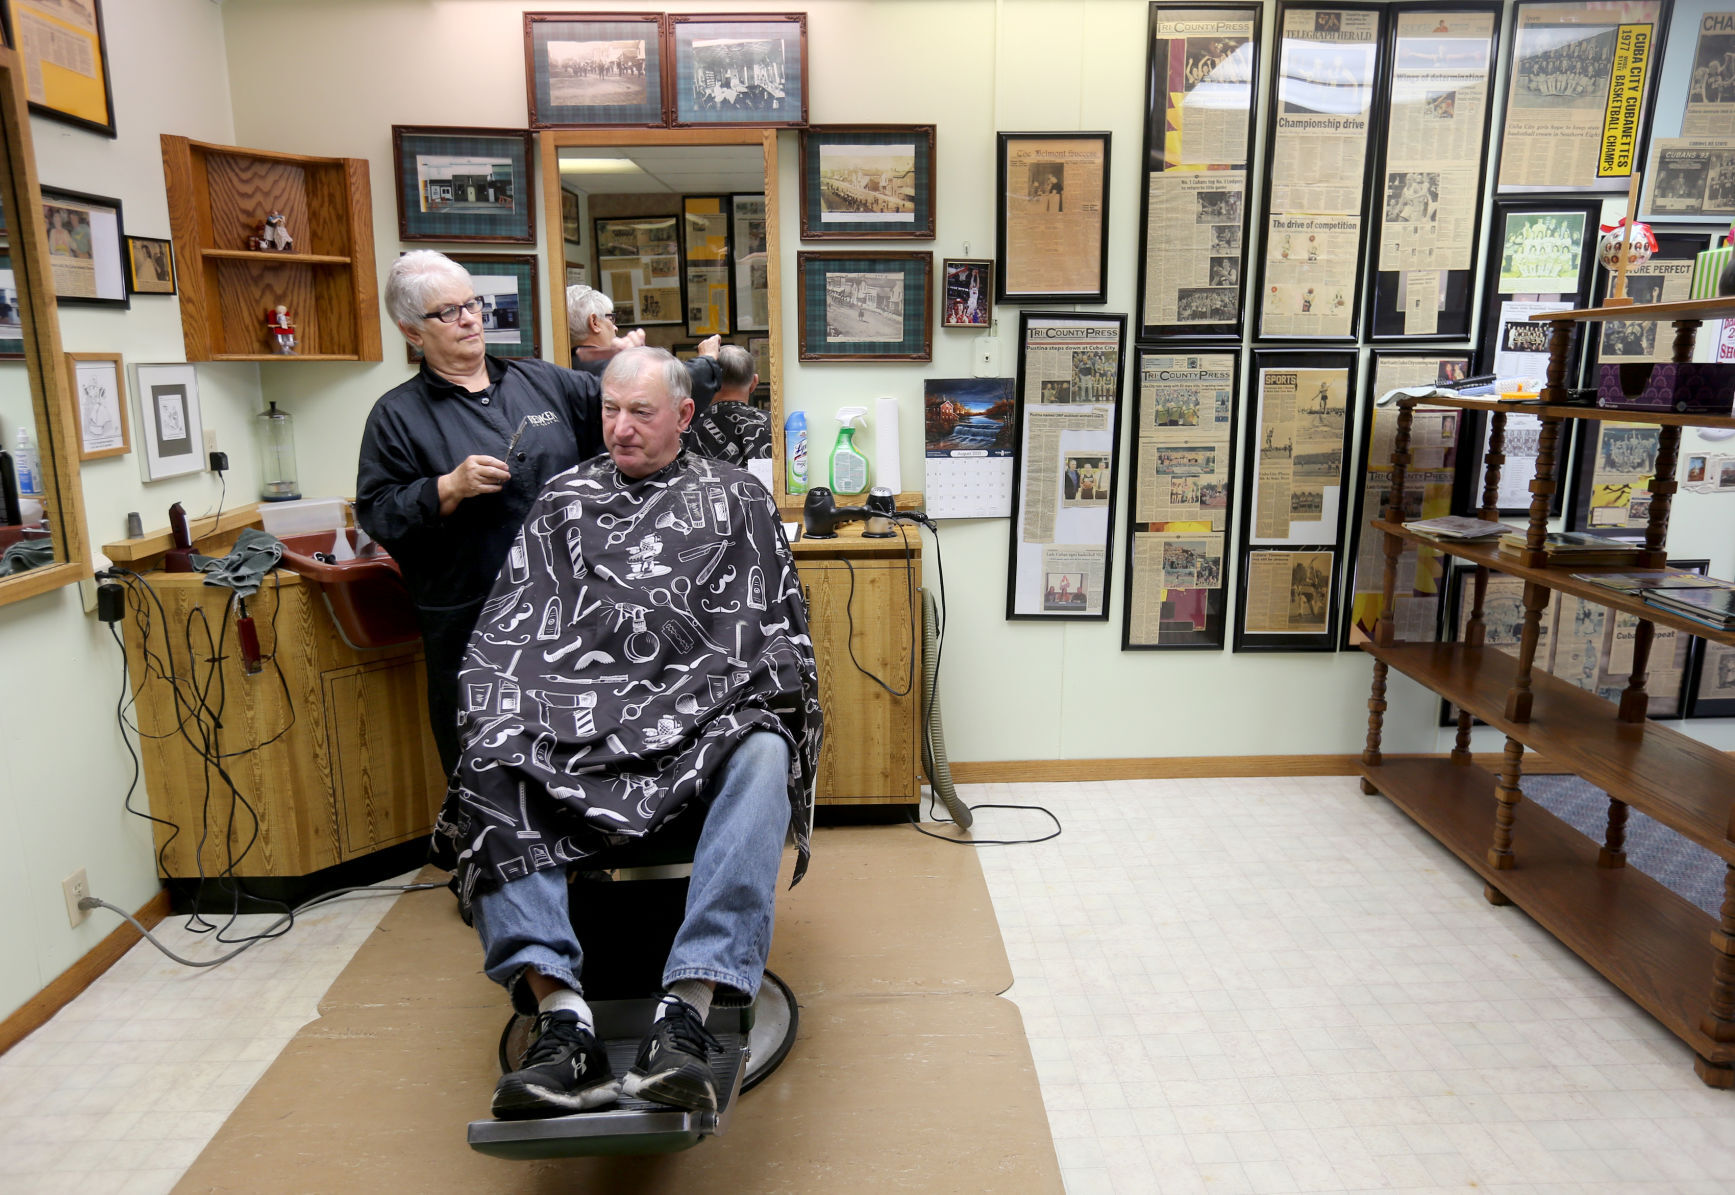 Joanie Von Glahn cuts hair for Glen Temperly, of Cuba City, Wis., at Joanie